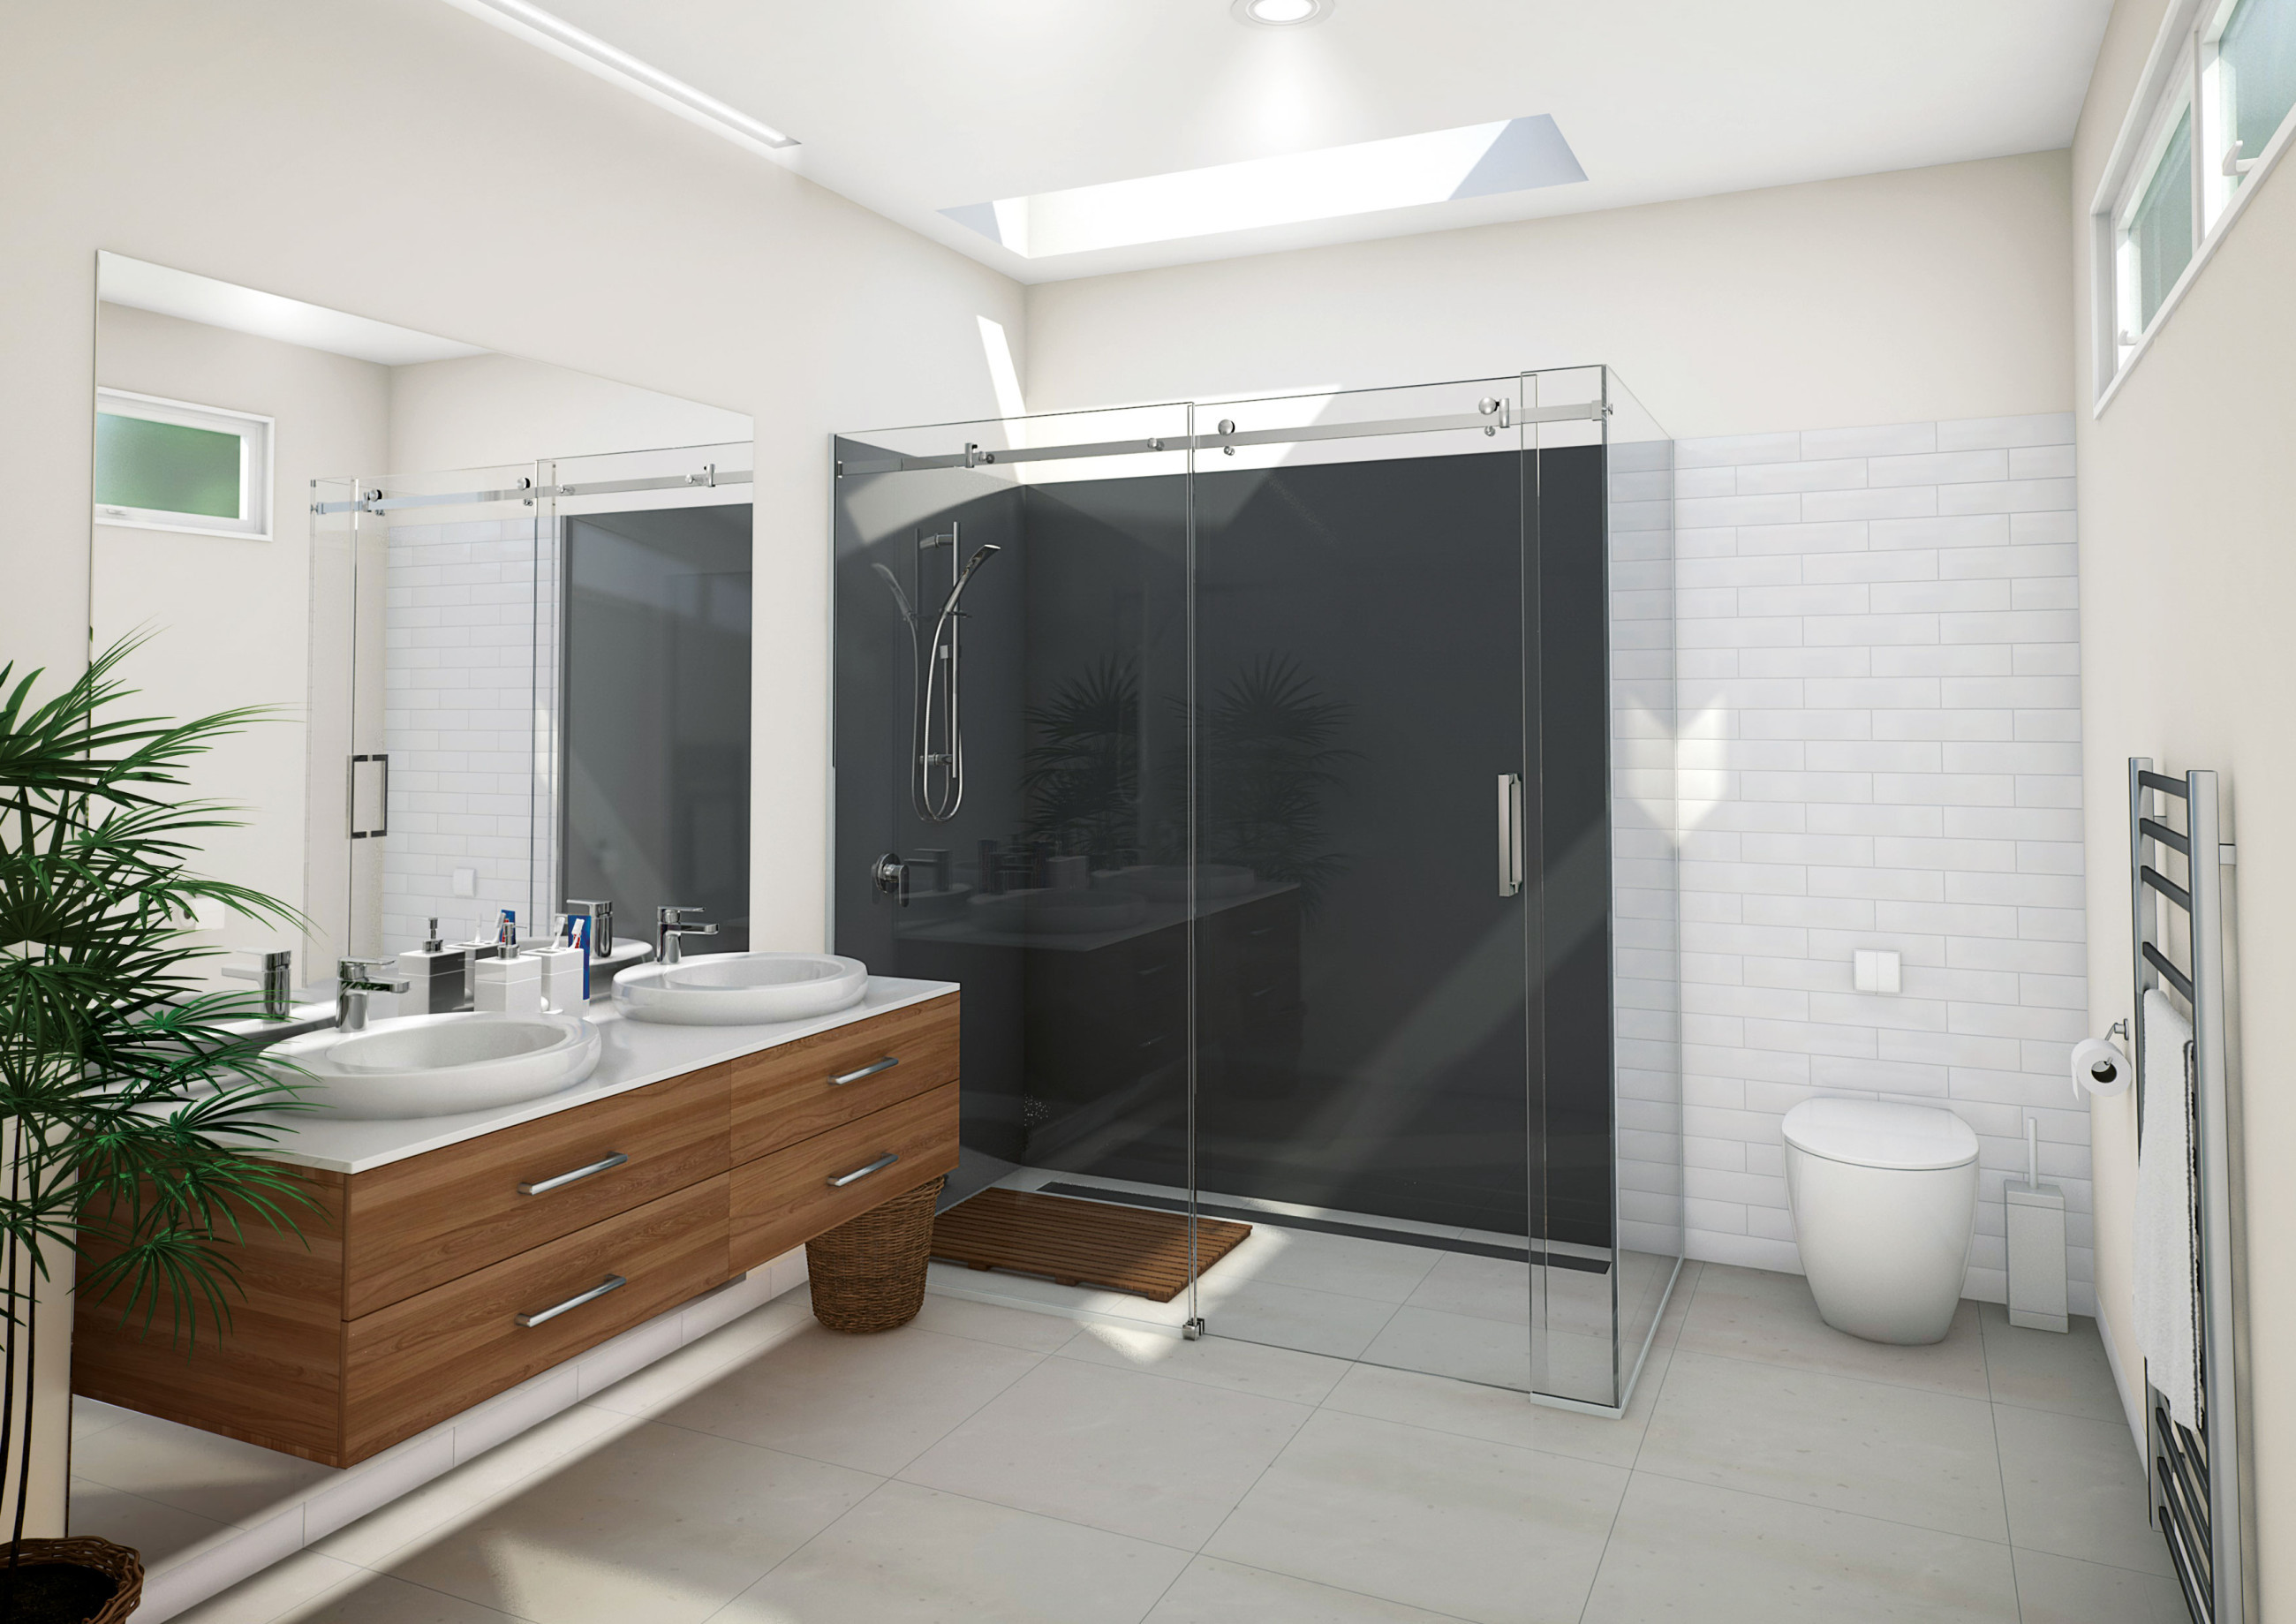 Modern bathroom featuring a transparent glass shower screen, black tiled shower area, shower head, and basin